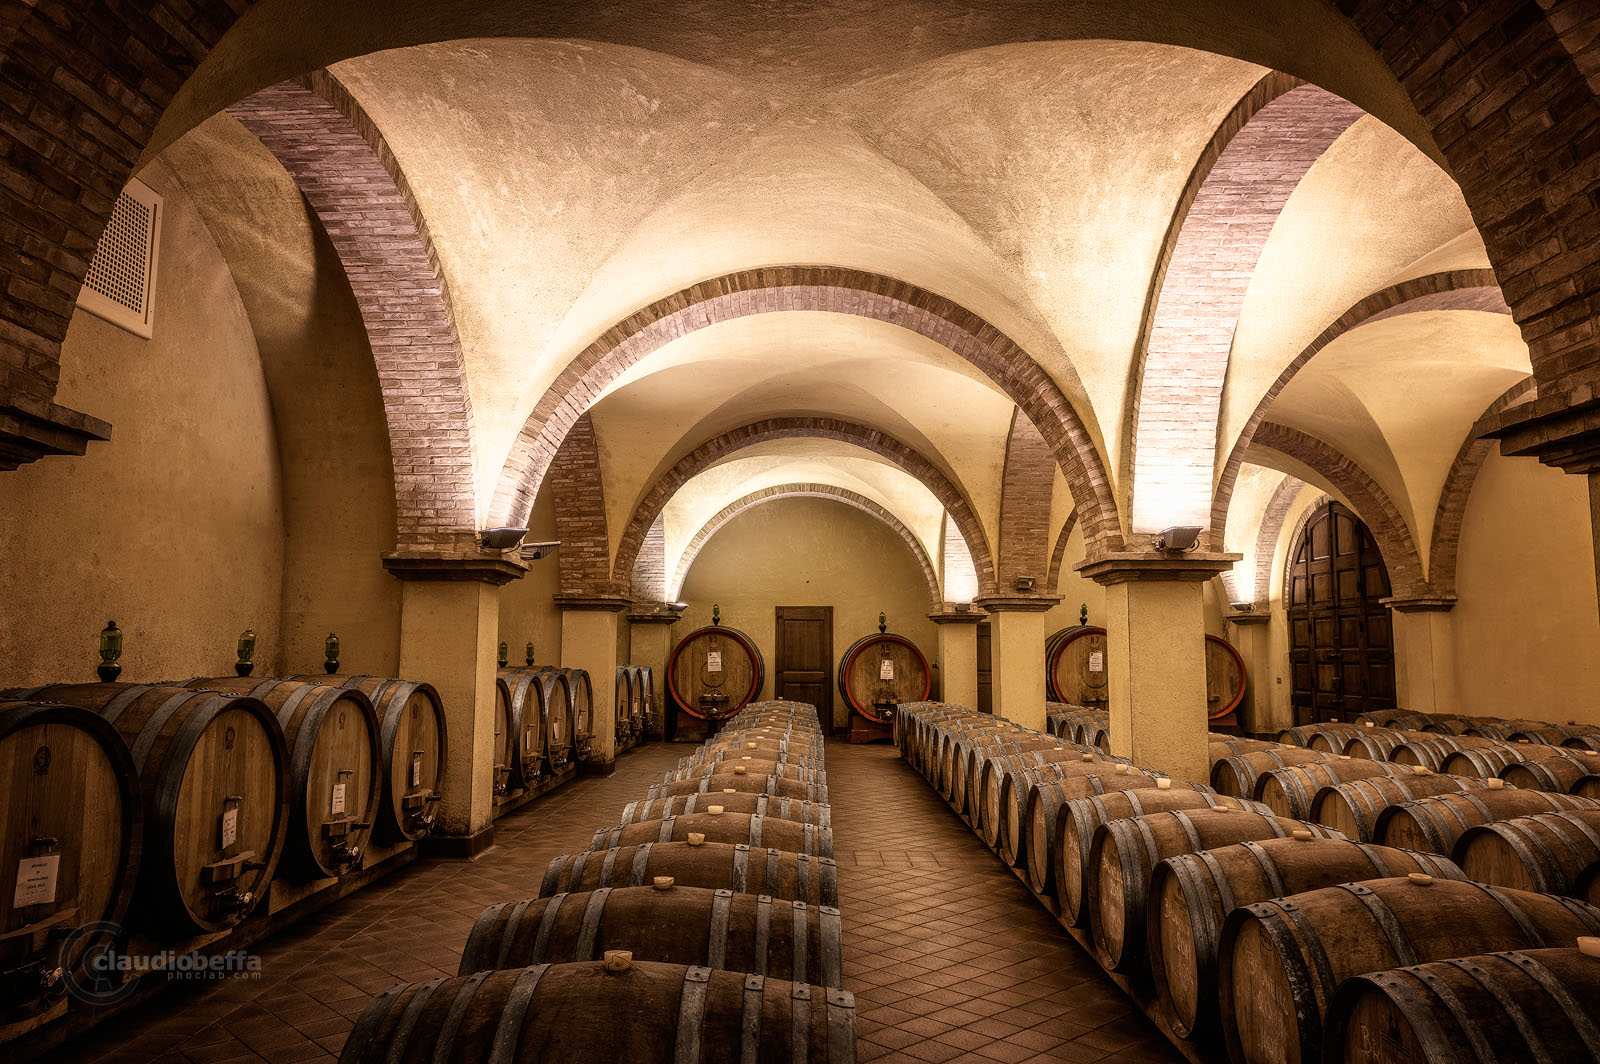 Cellar, Renaissance, Casks, Vaults, Rows, Ancient, Wine, Wine-making, Solaria, Tuscany, Toscana, Val d'Orcia, Italy, Italia, ancient wine cellars